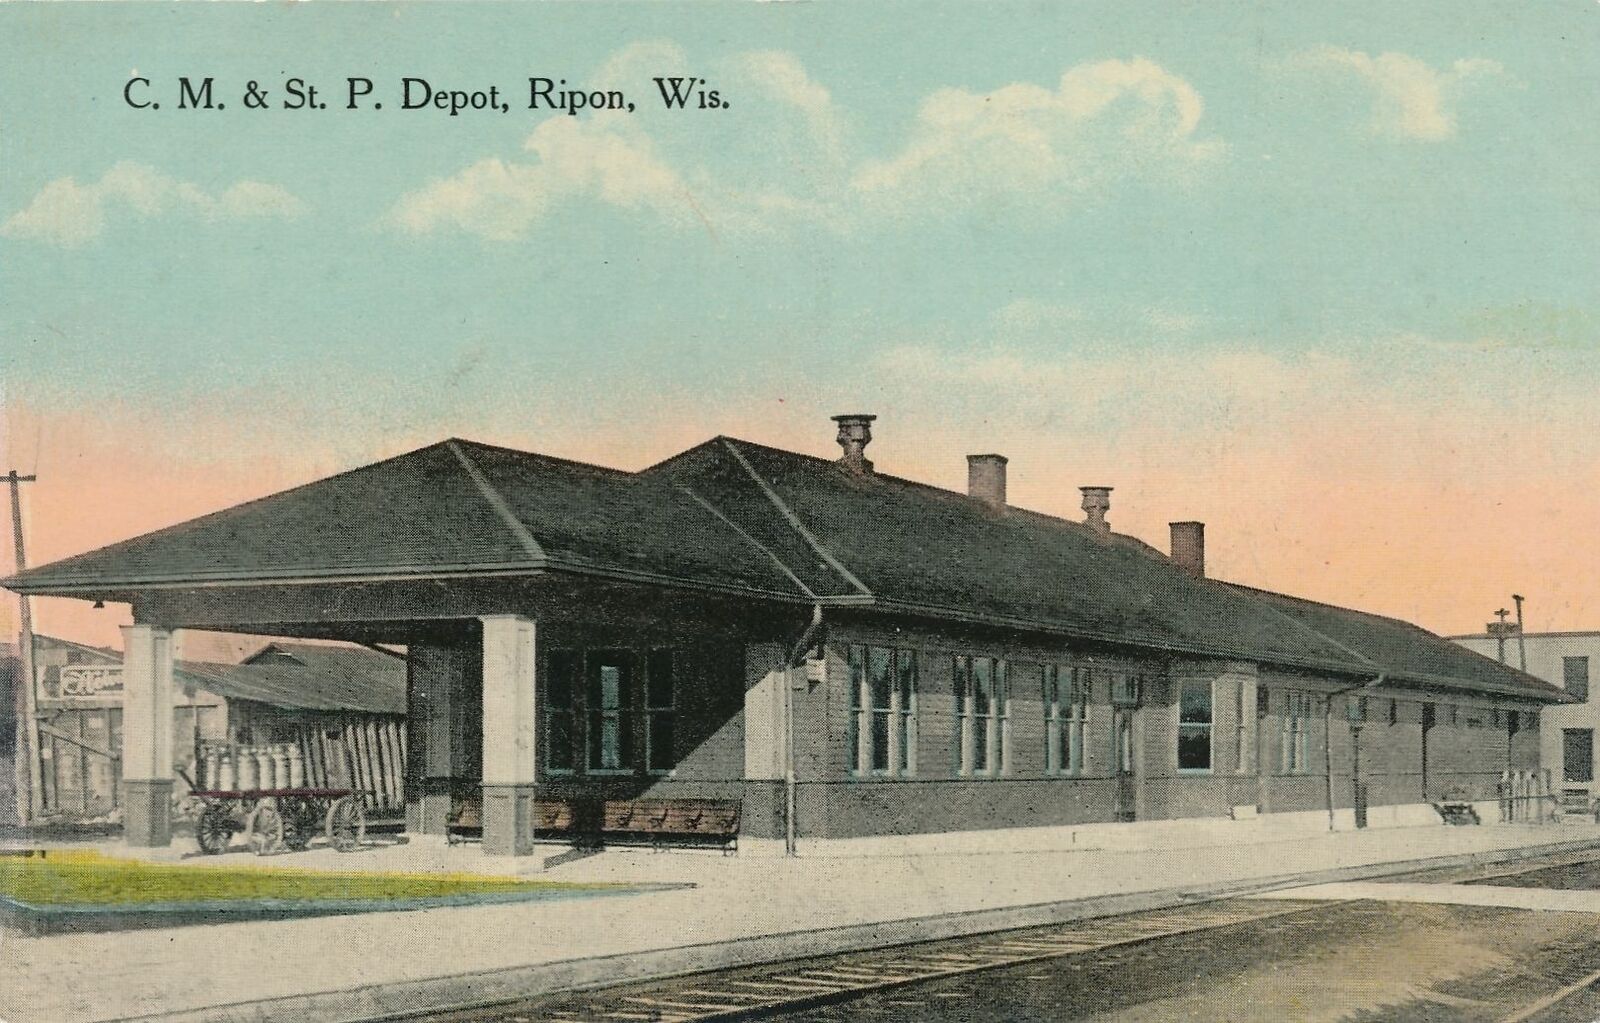 RIPON WI - C. M. & St. P. Railway Depot Postcard